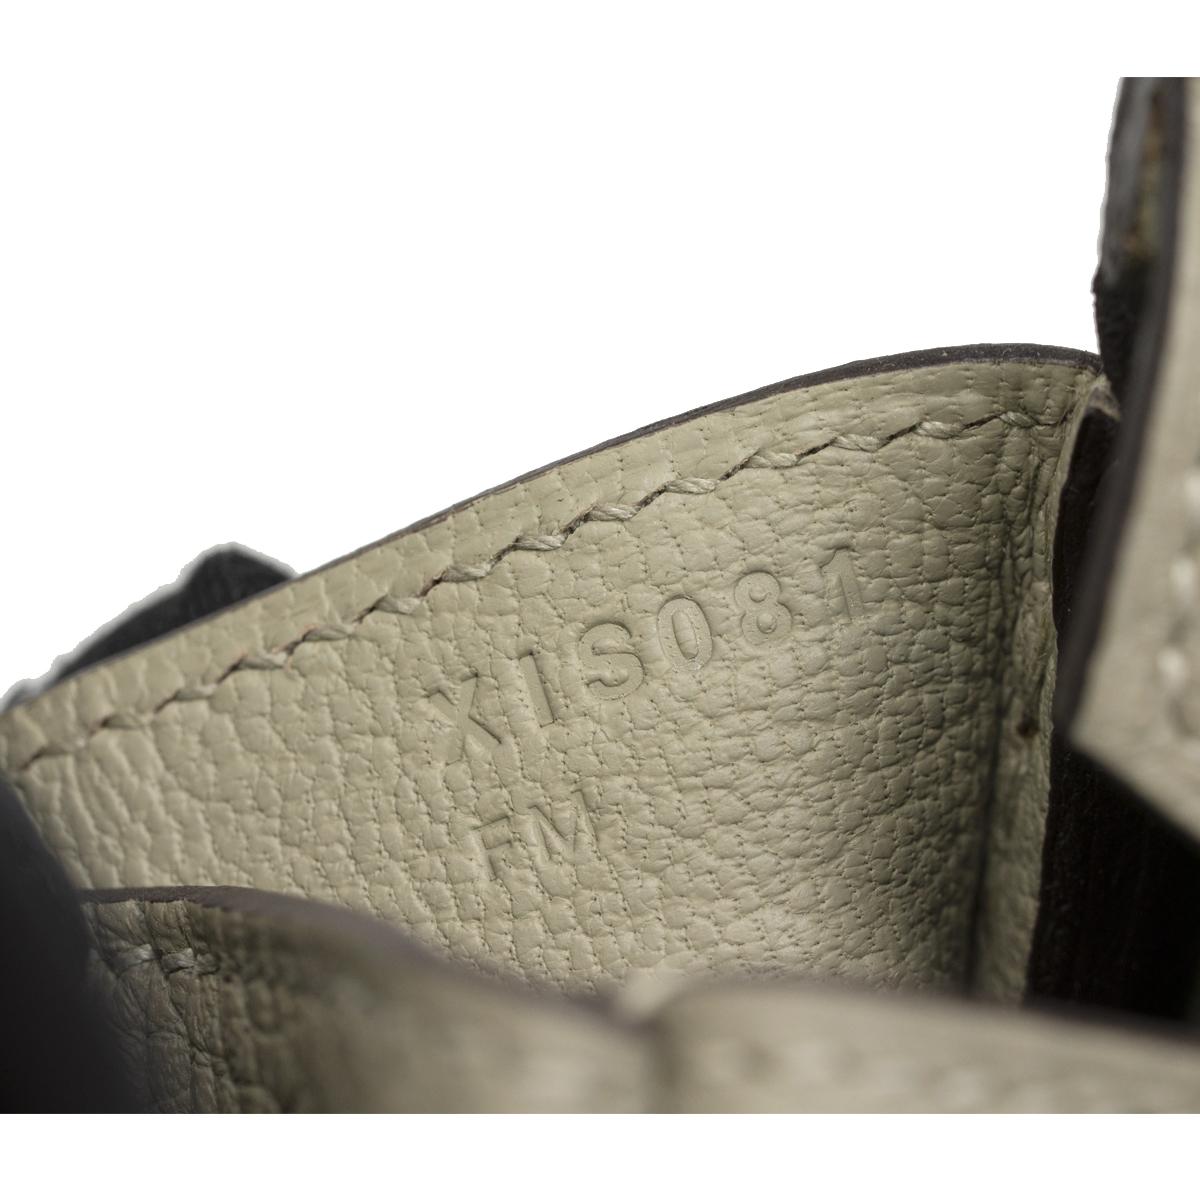 Hermes Birkin 30cm Sauge Clemence Leather Handbag 2016 COMES WITH RECEIPT, DUST  For Sale 2